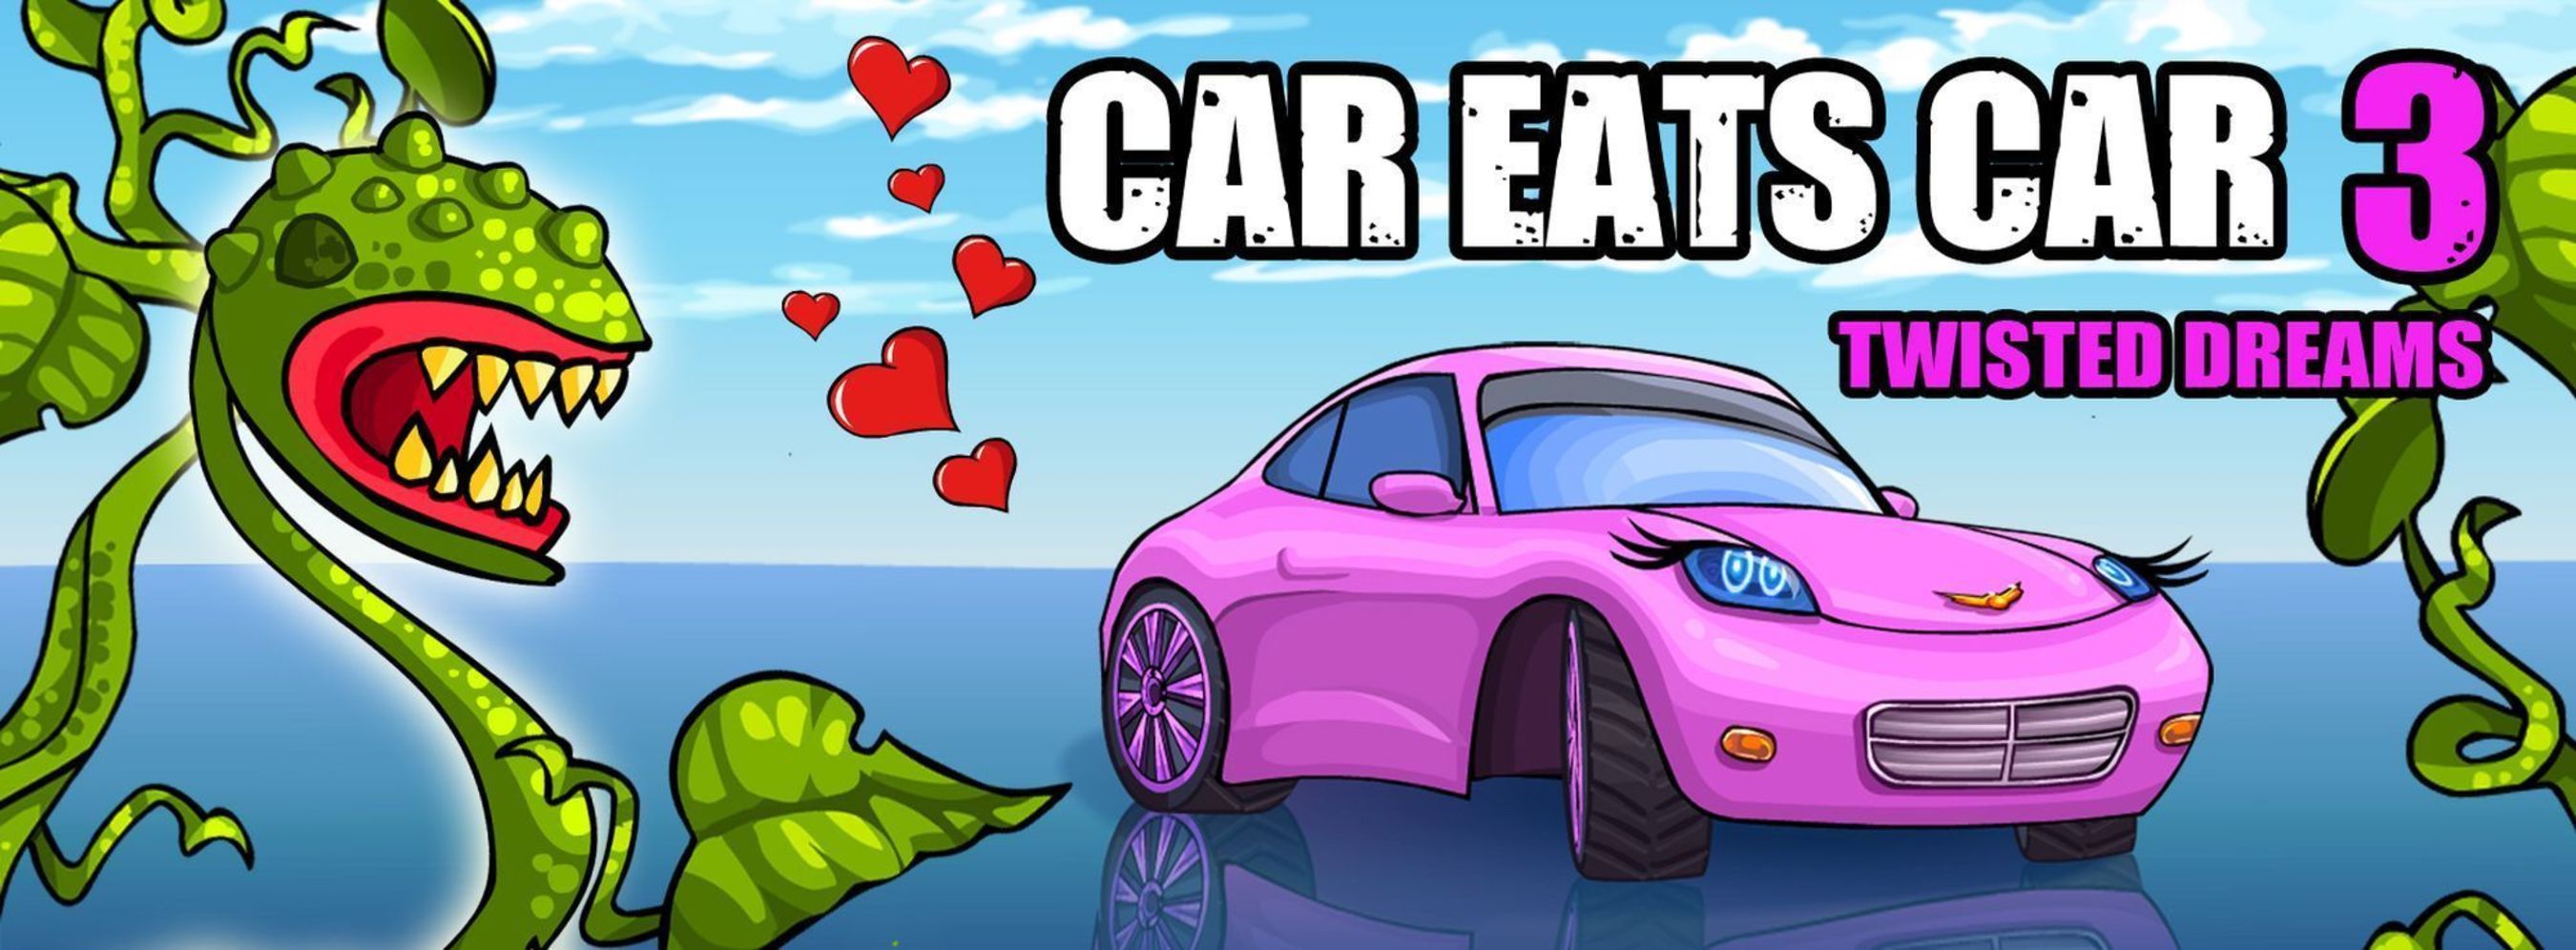 Car Eats Car 3 - online game for PC (PRNewsFoto/MyRealGames_com)